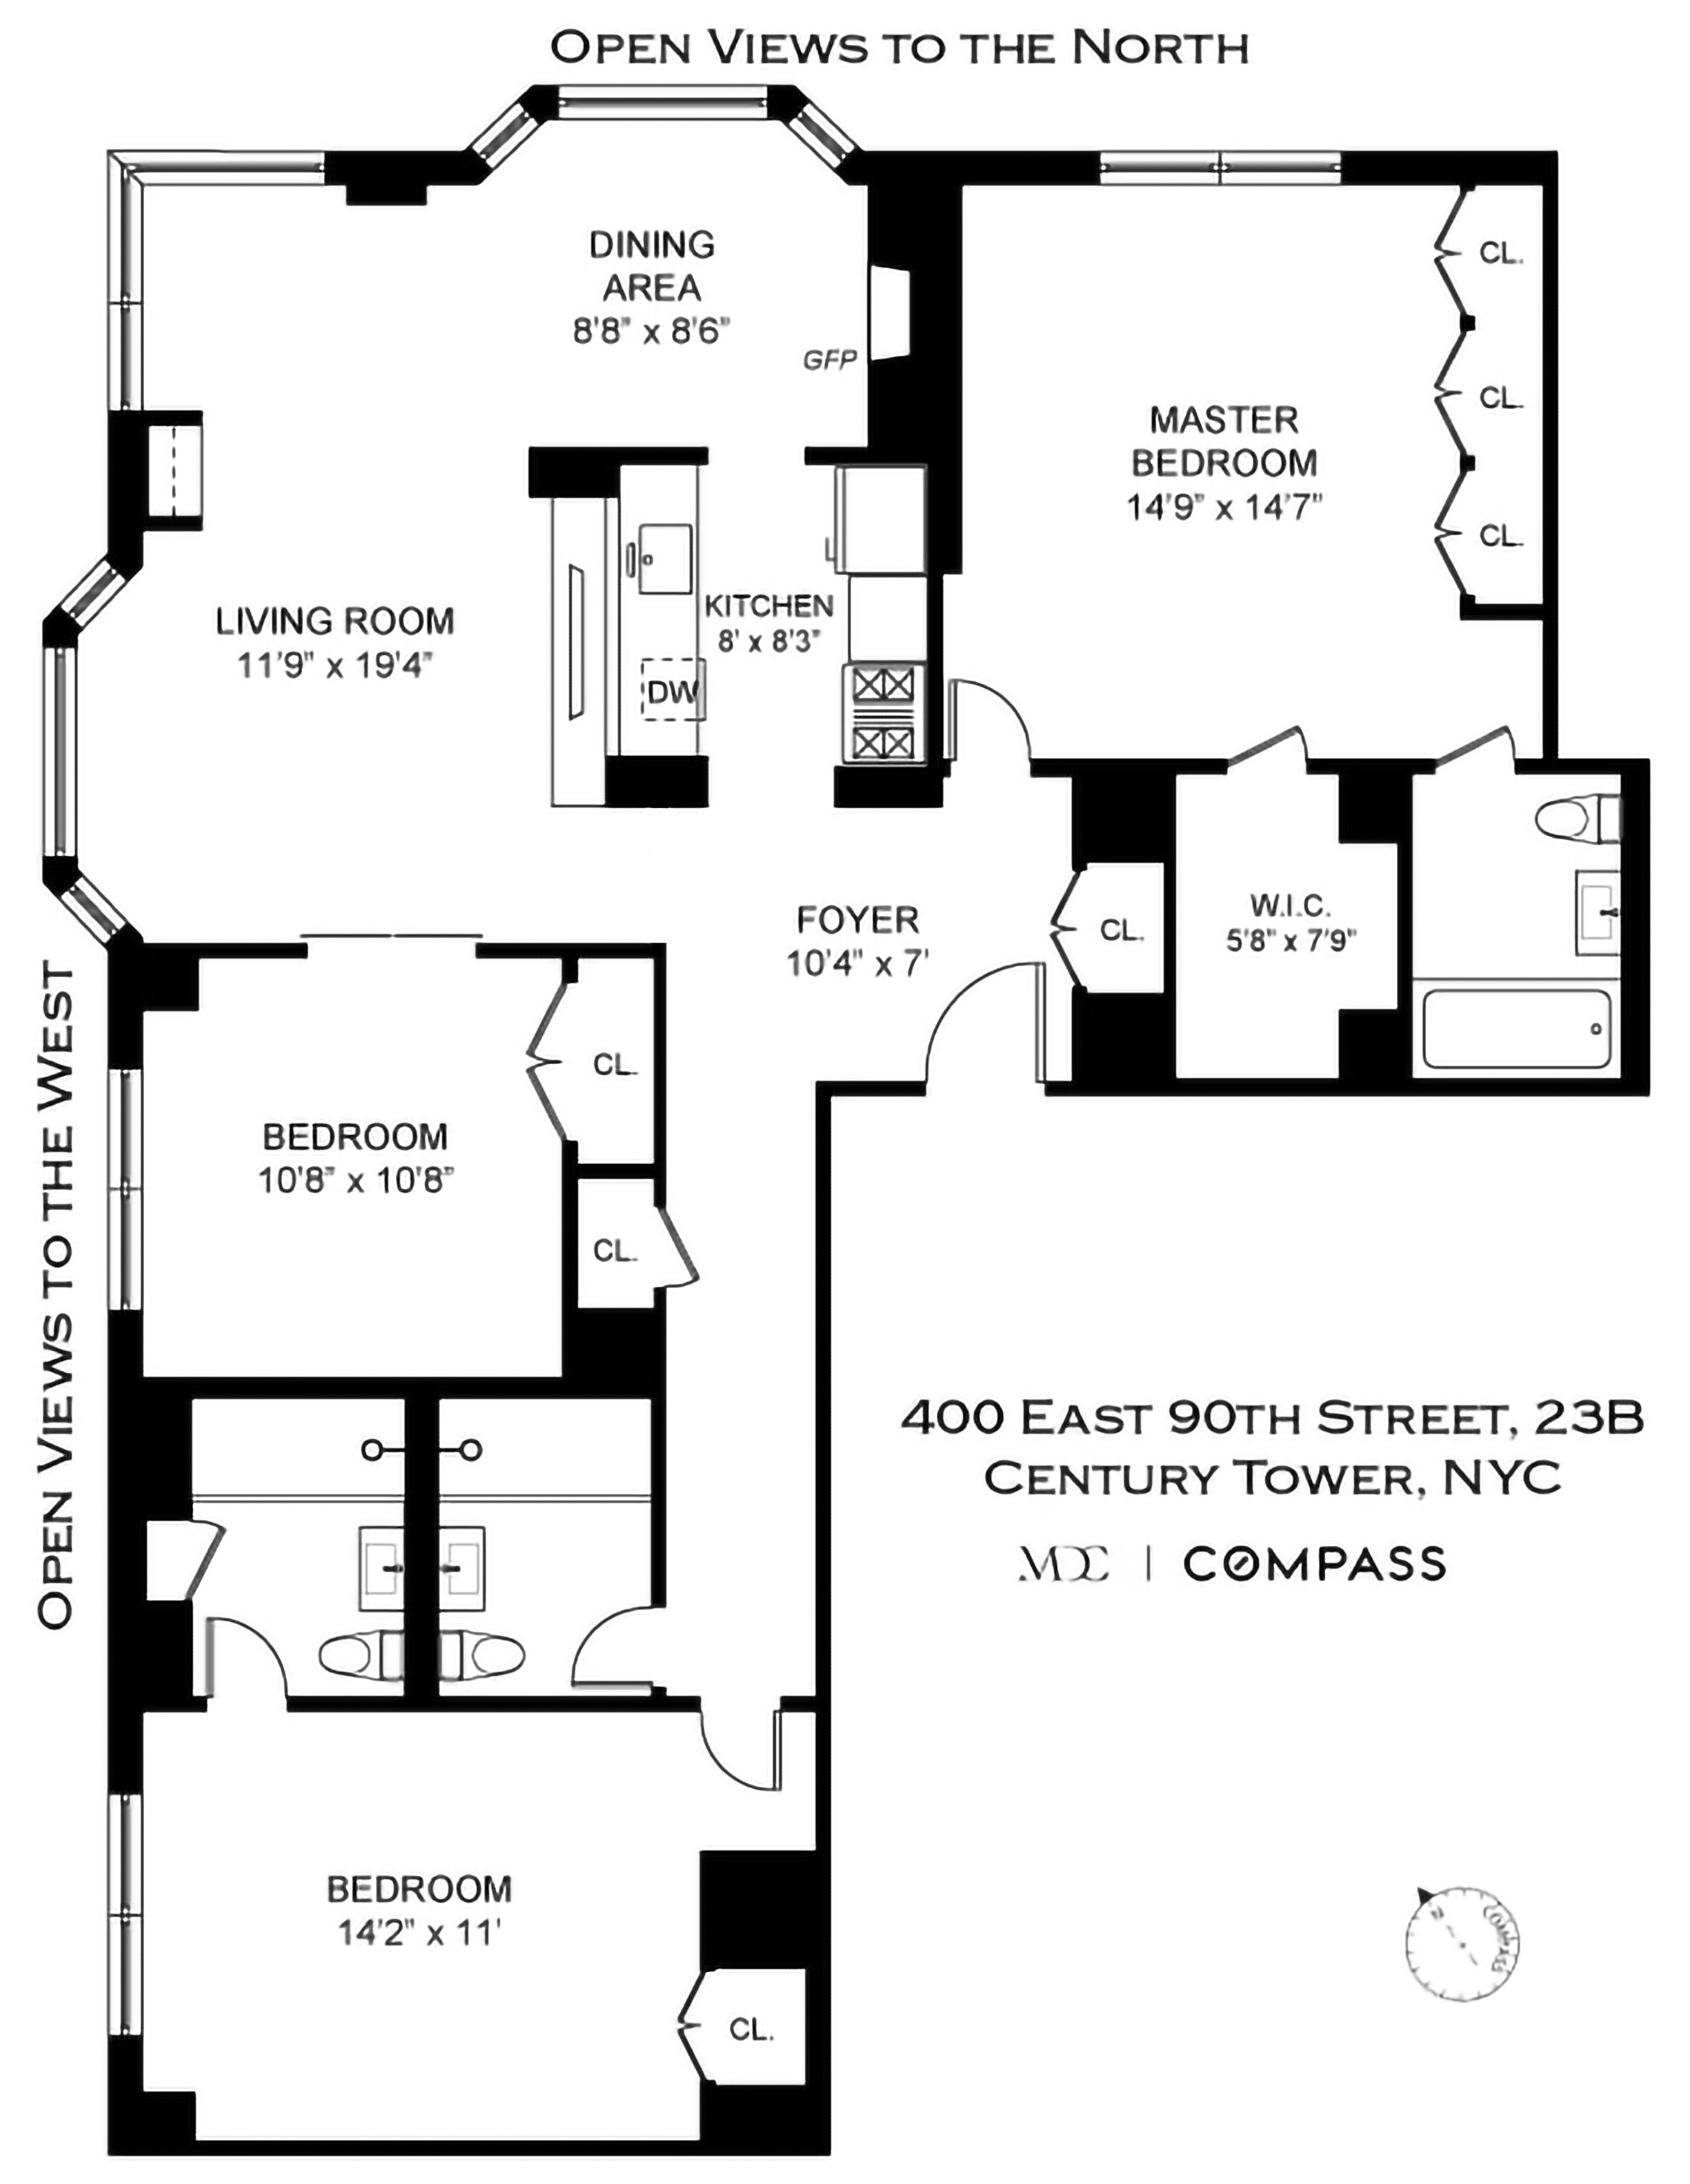 Floorplan for 400 East 90th Street, 23B